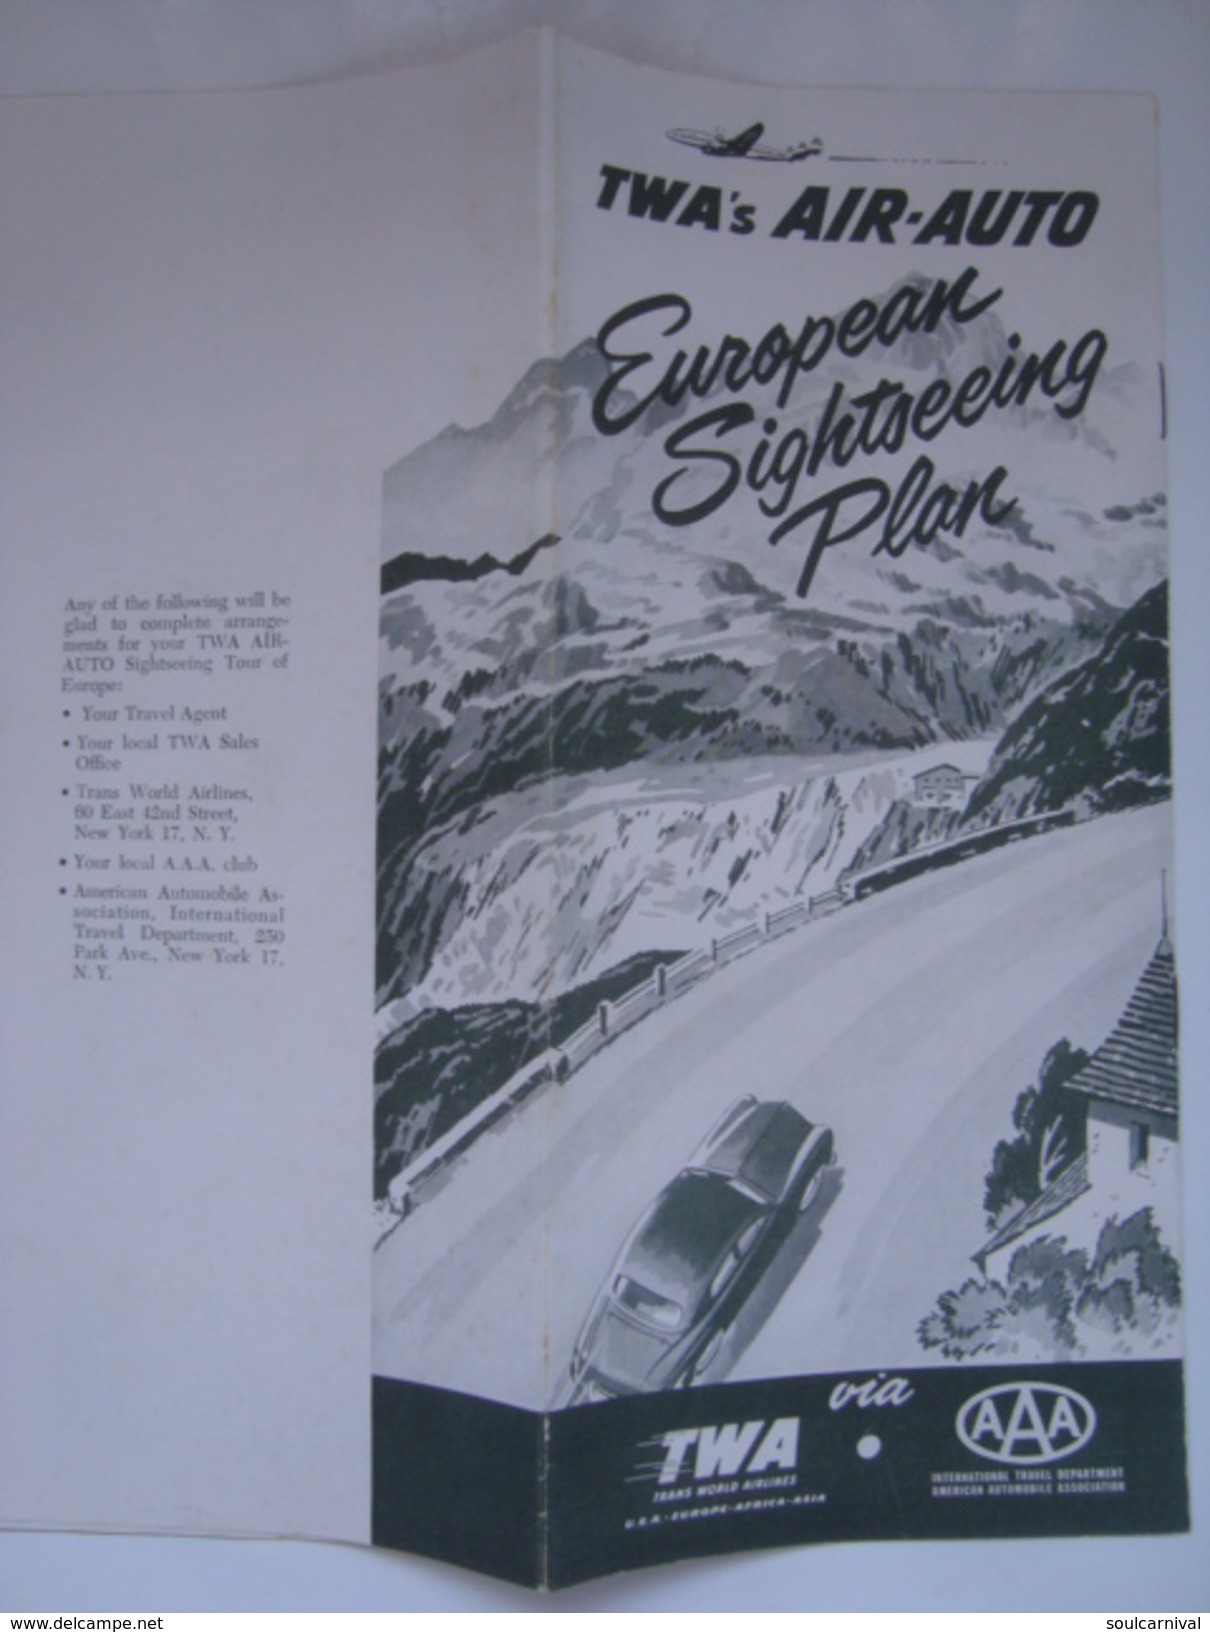 TWA'S AIR-AUTO. EUROPEAN SIGHTSEEING PLAN. TWA VIA AAA - 1952 APROX. 8 PAGES. AMERICAN AUTOMOBILE ASSOCIATION. - Advertenties